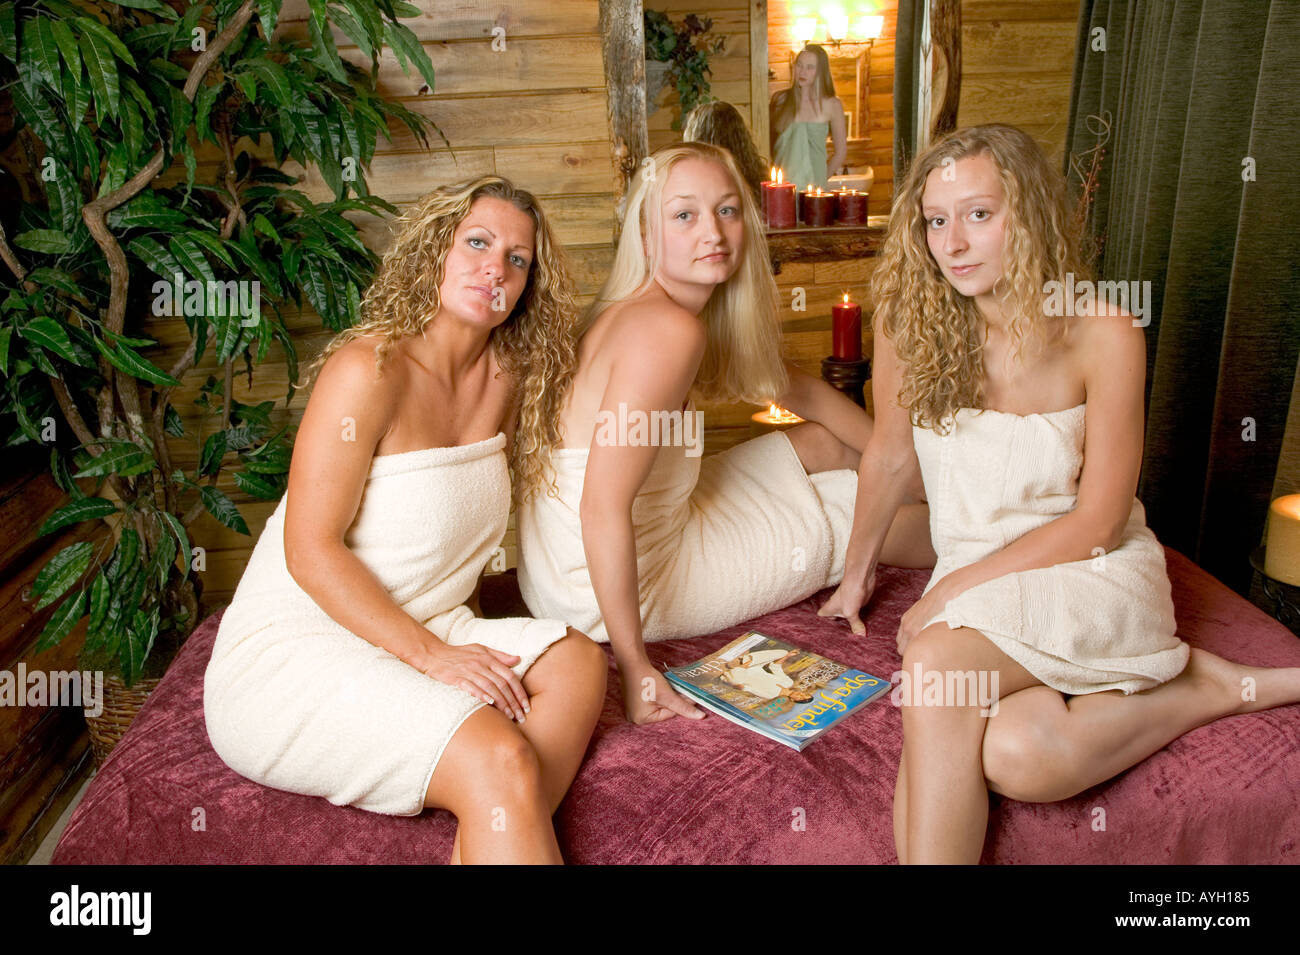 Three women enjoy a day at the spa Stock Photo